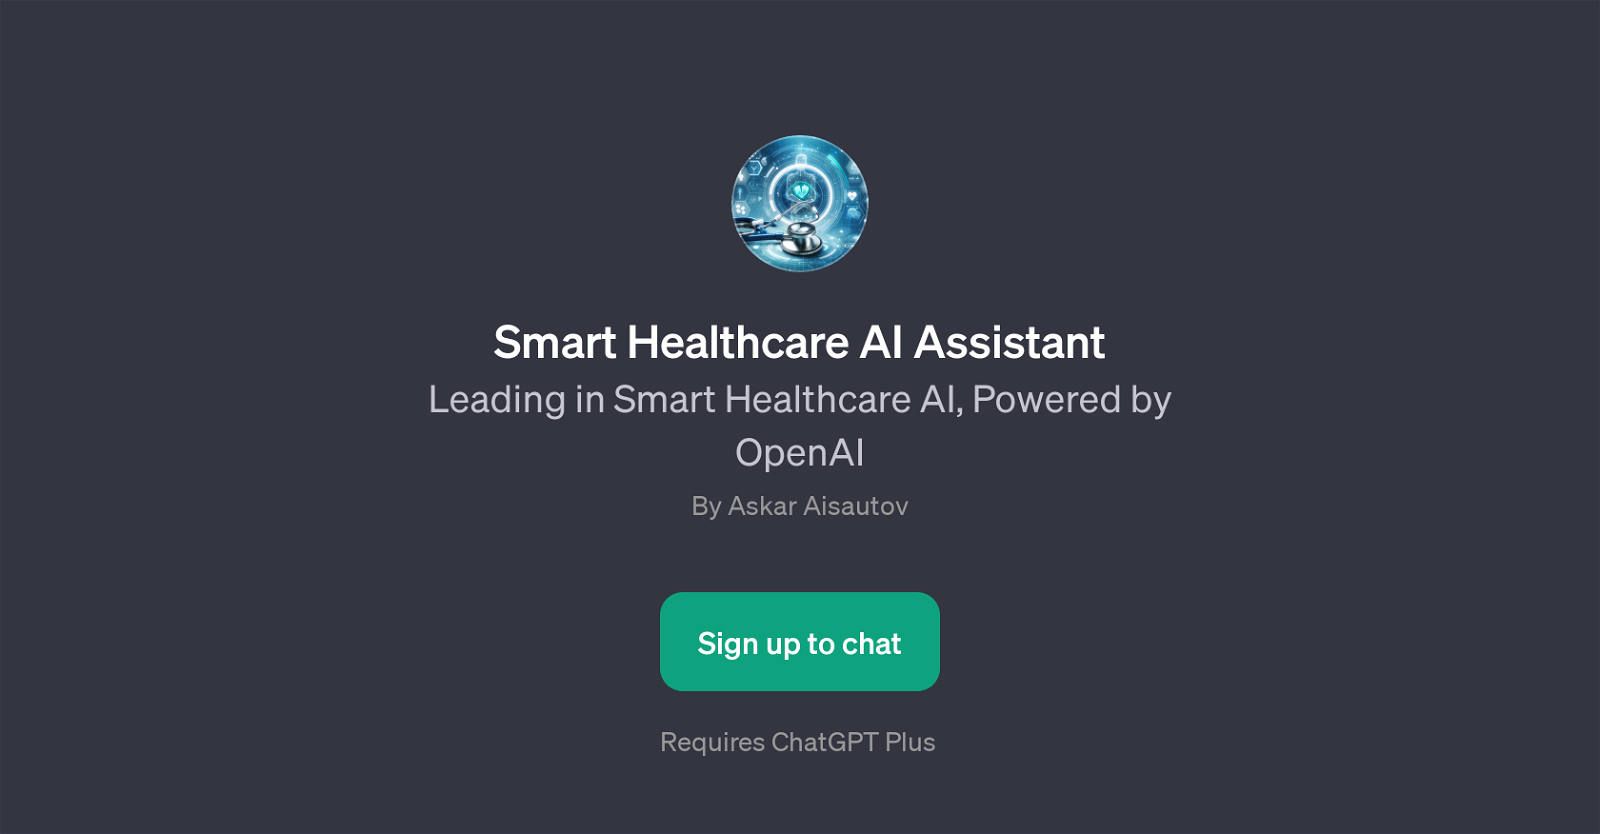 Smart Healthcare AI Assistant website